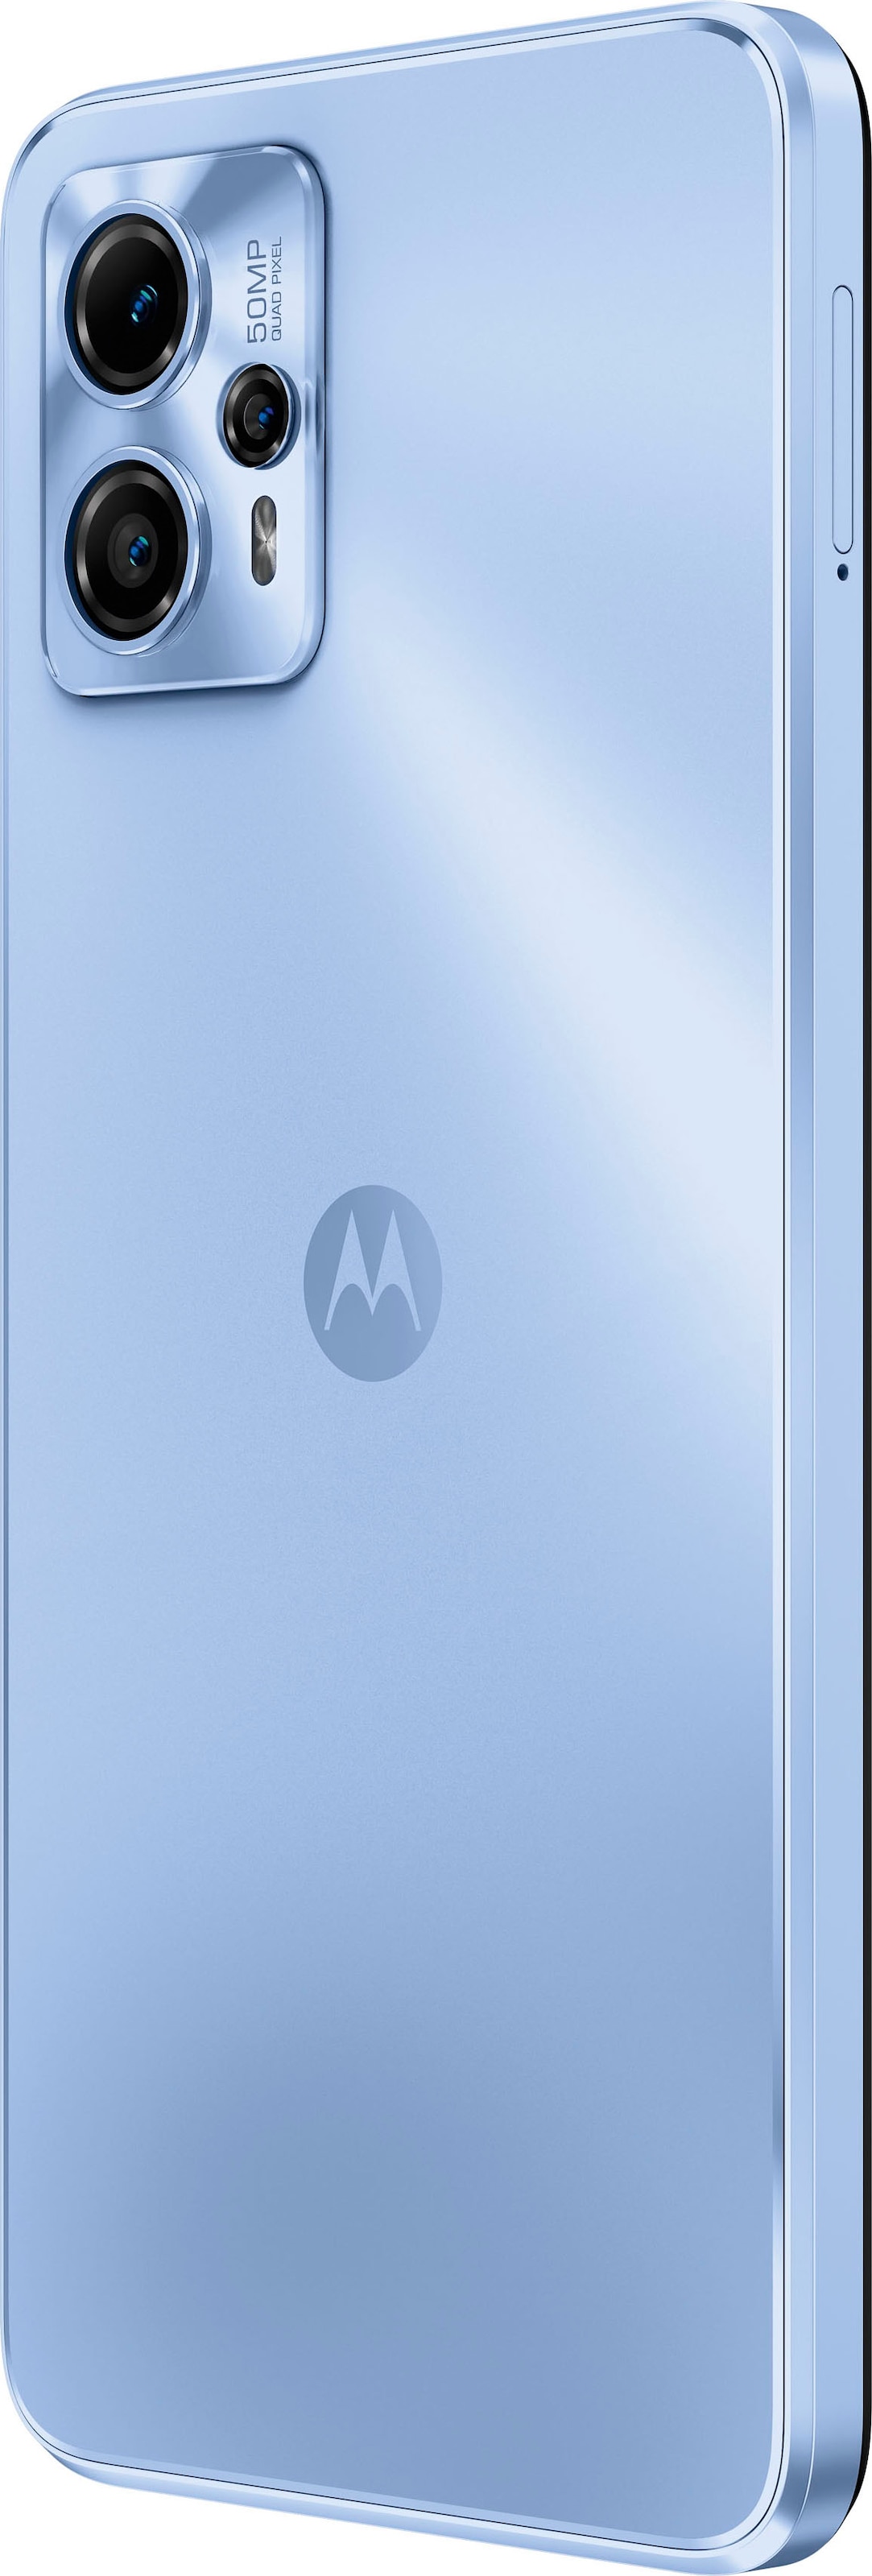 Motorola Smartphone »g13«, lavender blue, 16,56 cm/6,52 Zoll, 128 GB Speicherplatz, 50 MP Kamera